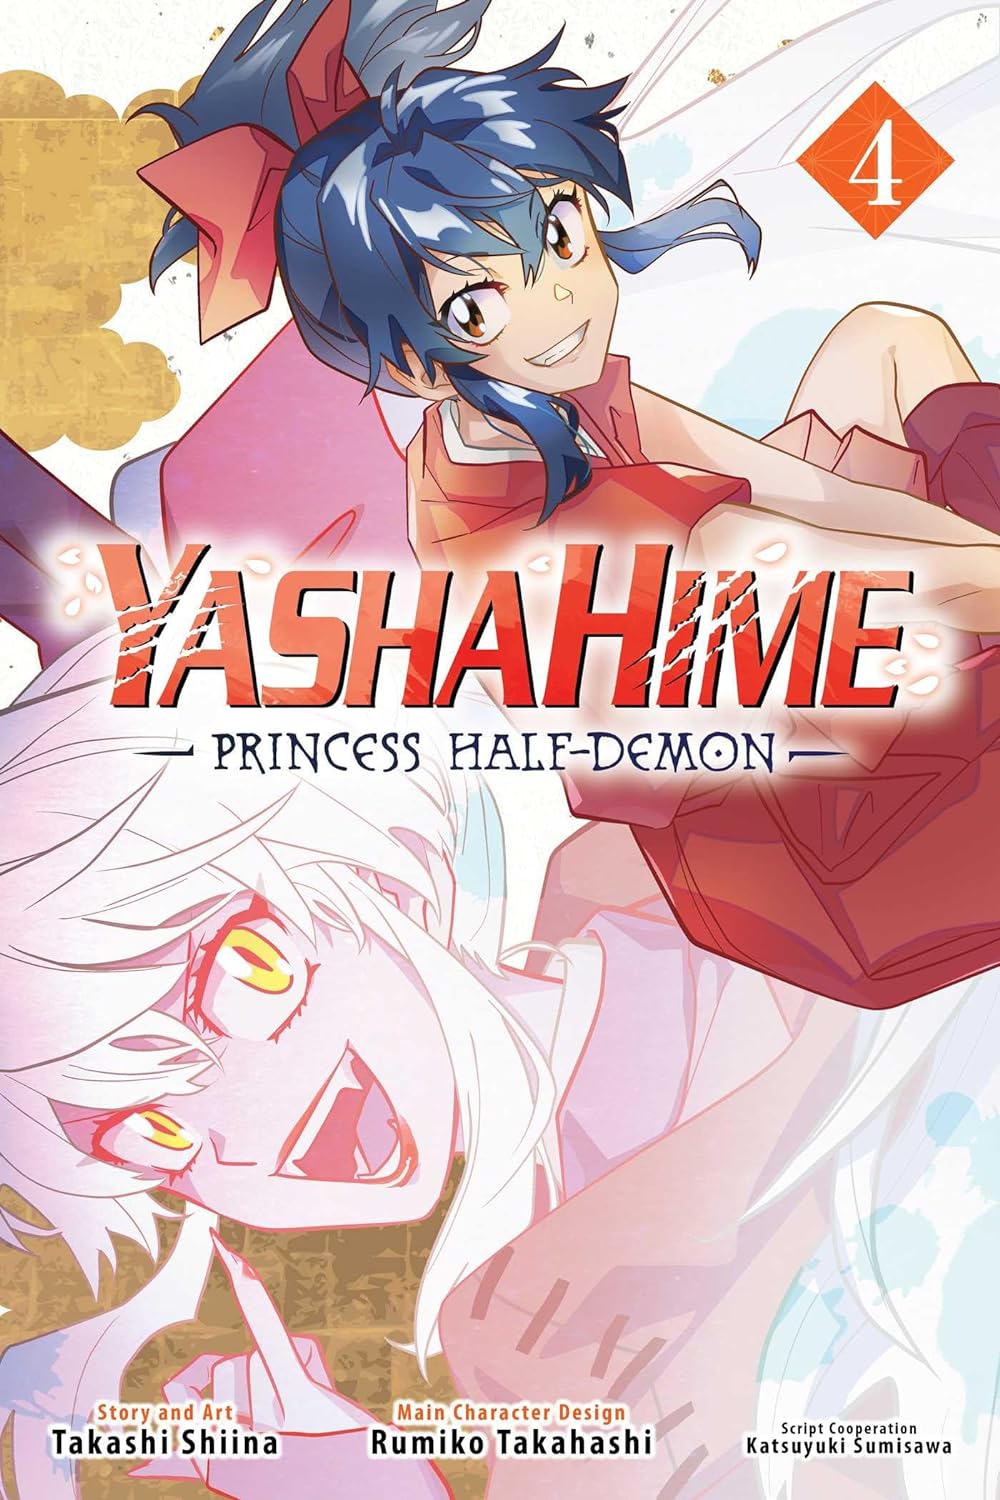 Yashahime: Princess Half-Demon Vol. 04